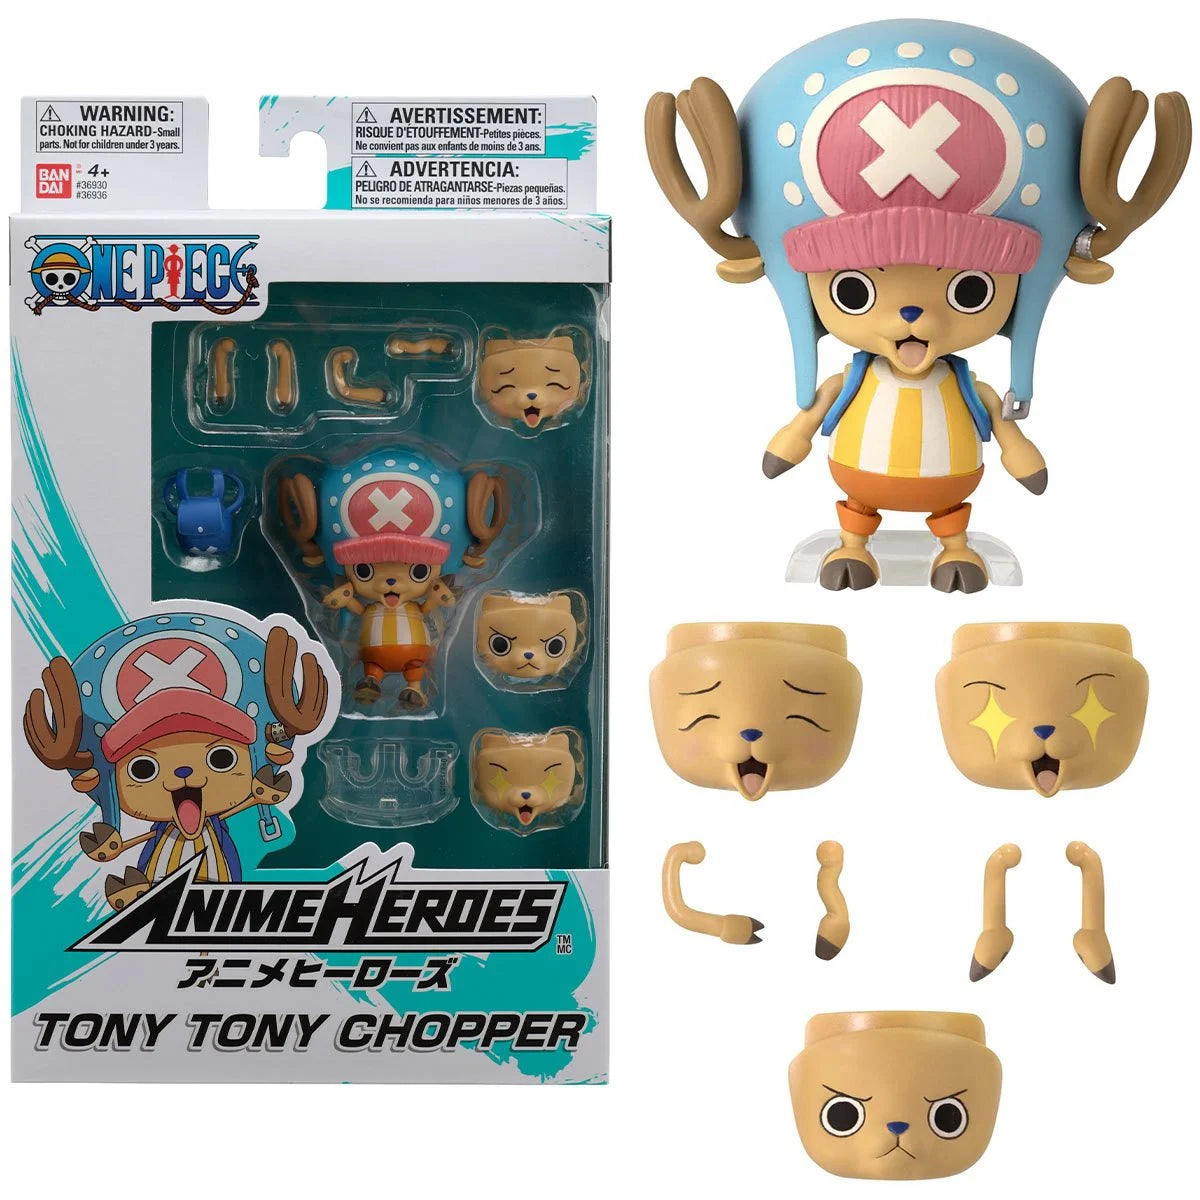 Bandai One Piece Anime Heroes Tony Tony Chopper Action Figure